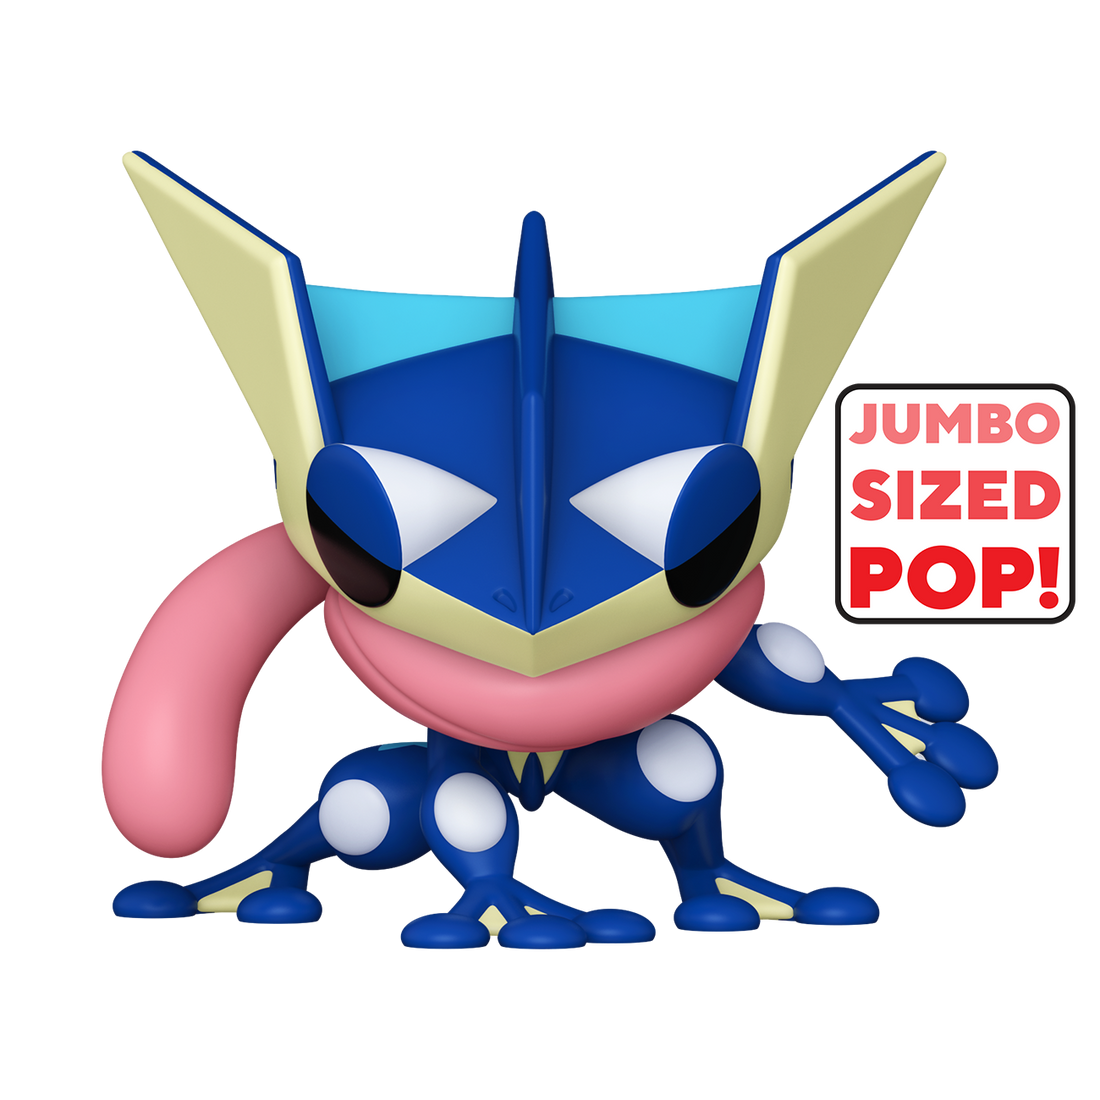 Funko Pop! Games Jumbo Sized Pokemon 908 Greninja Funko